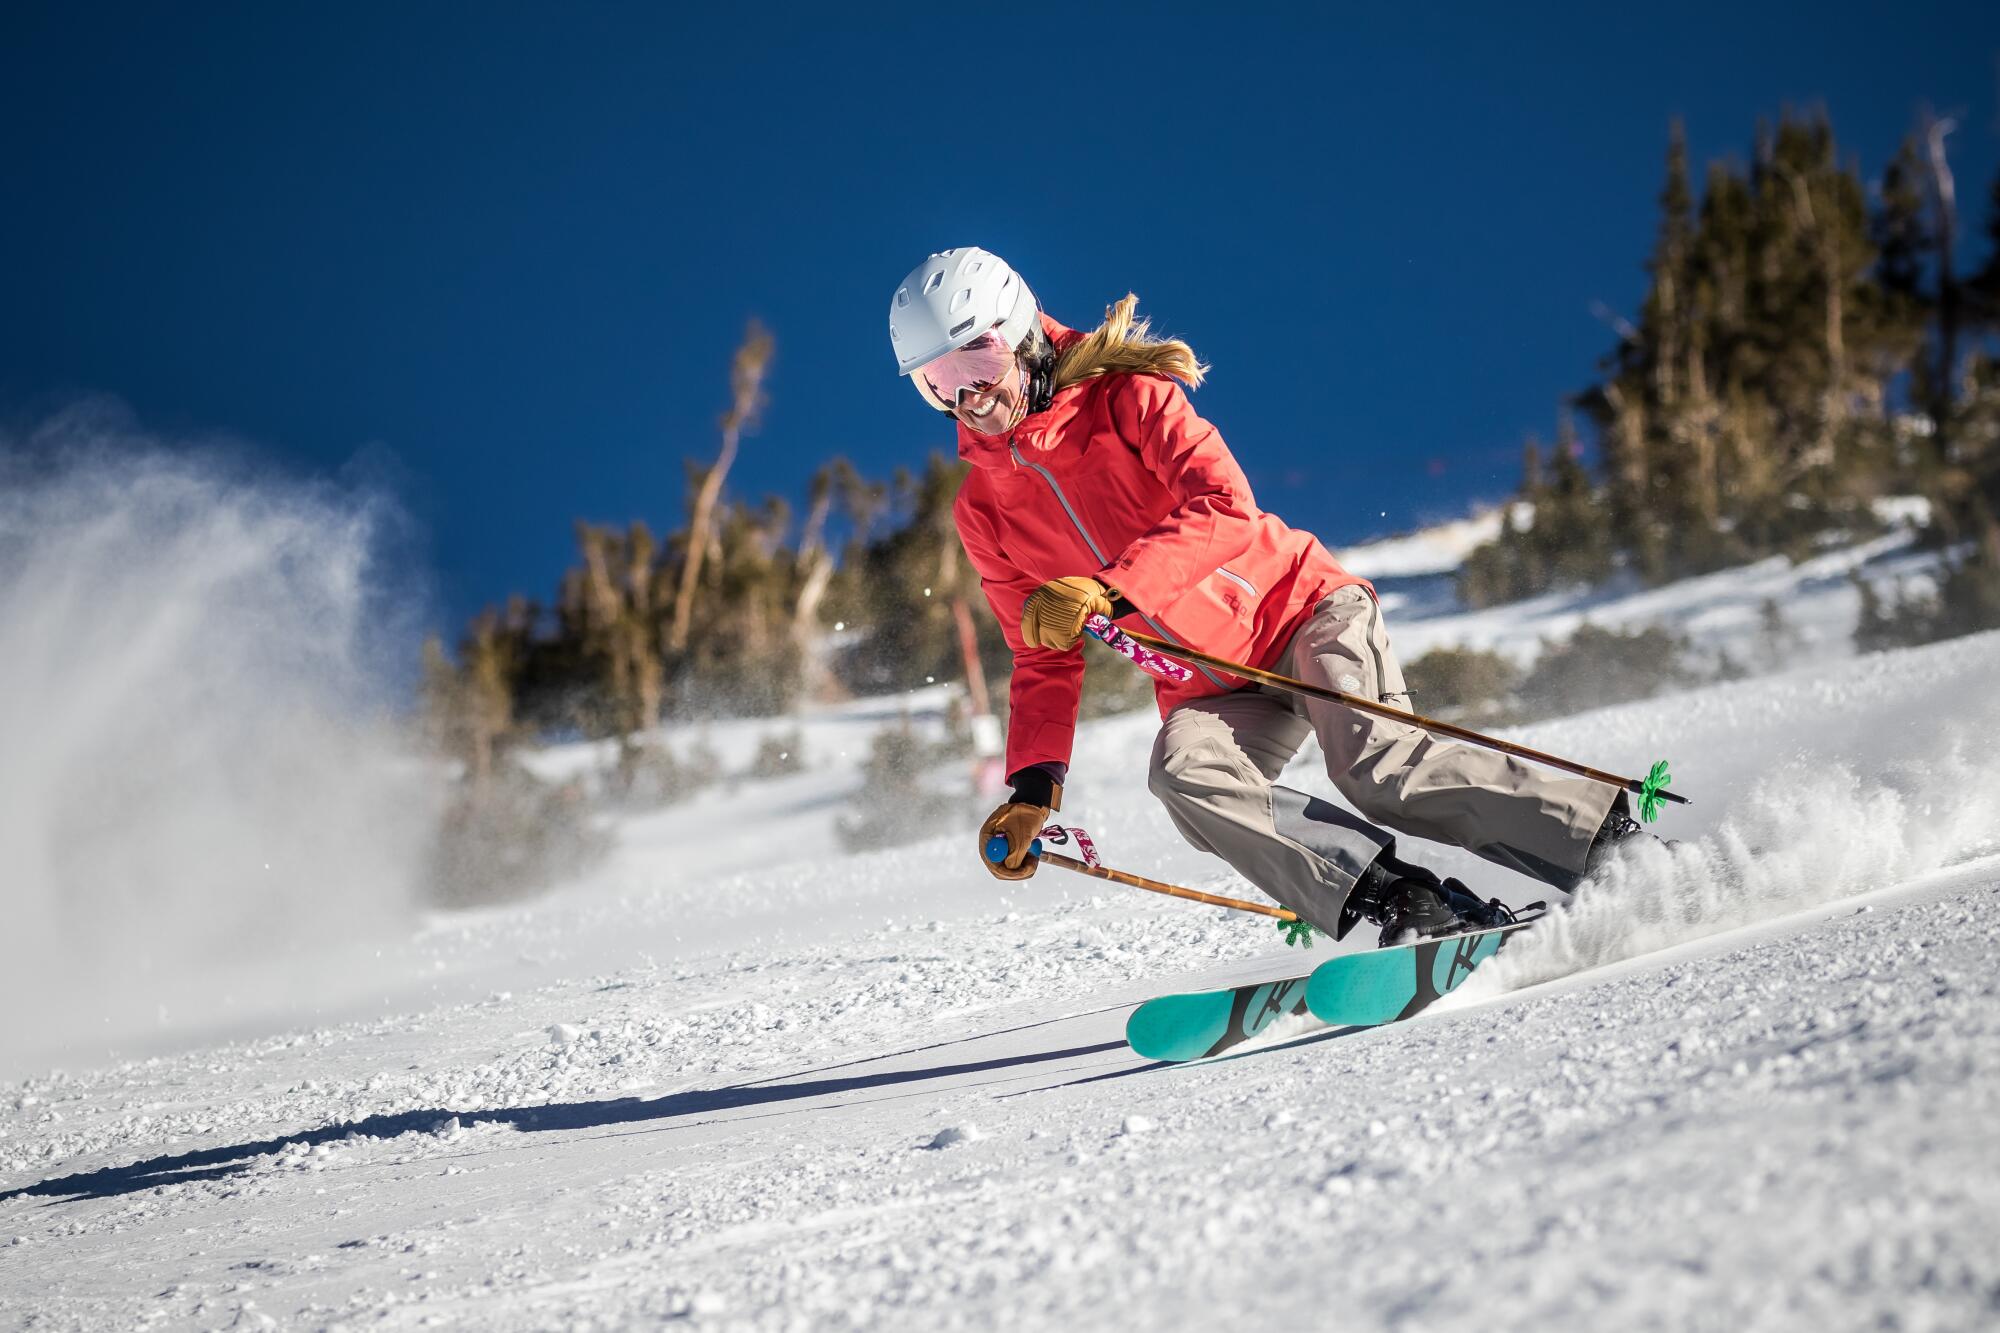 A woman skis down a mountain smiling